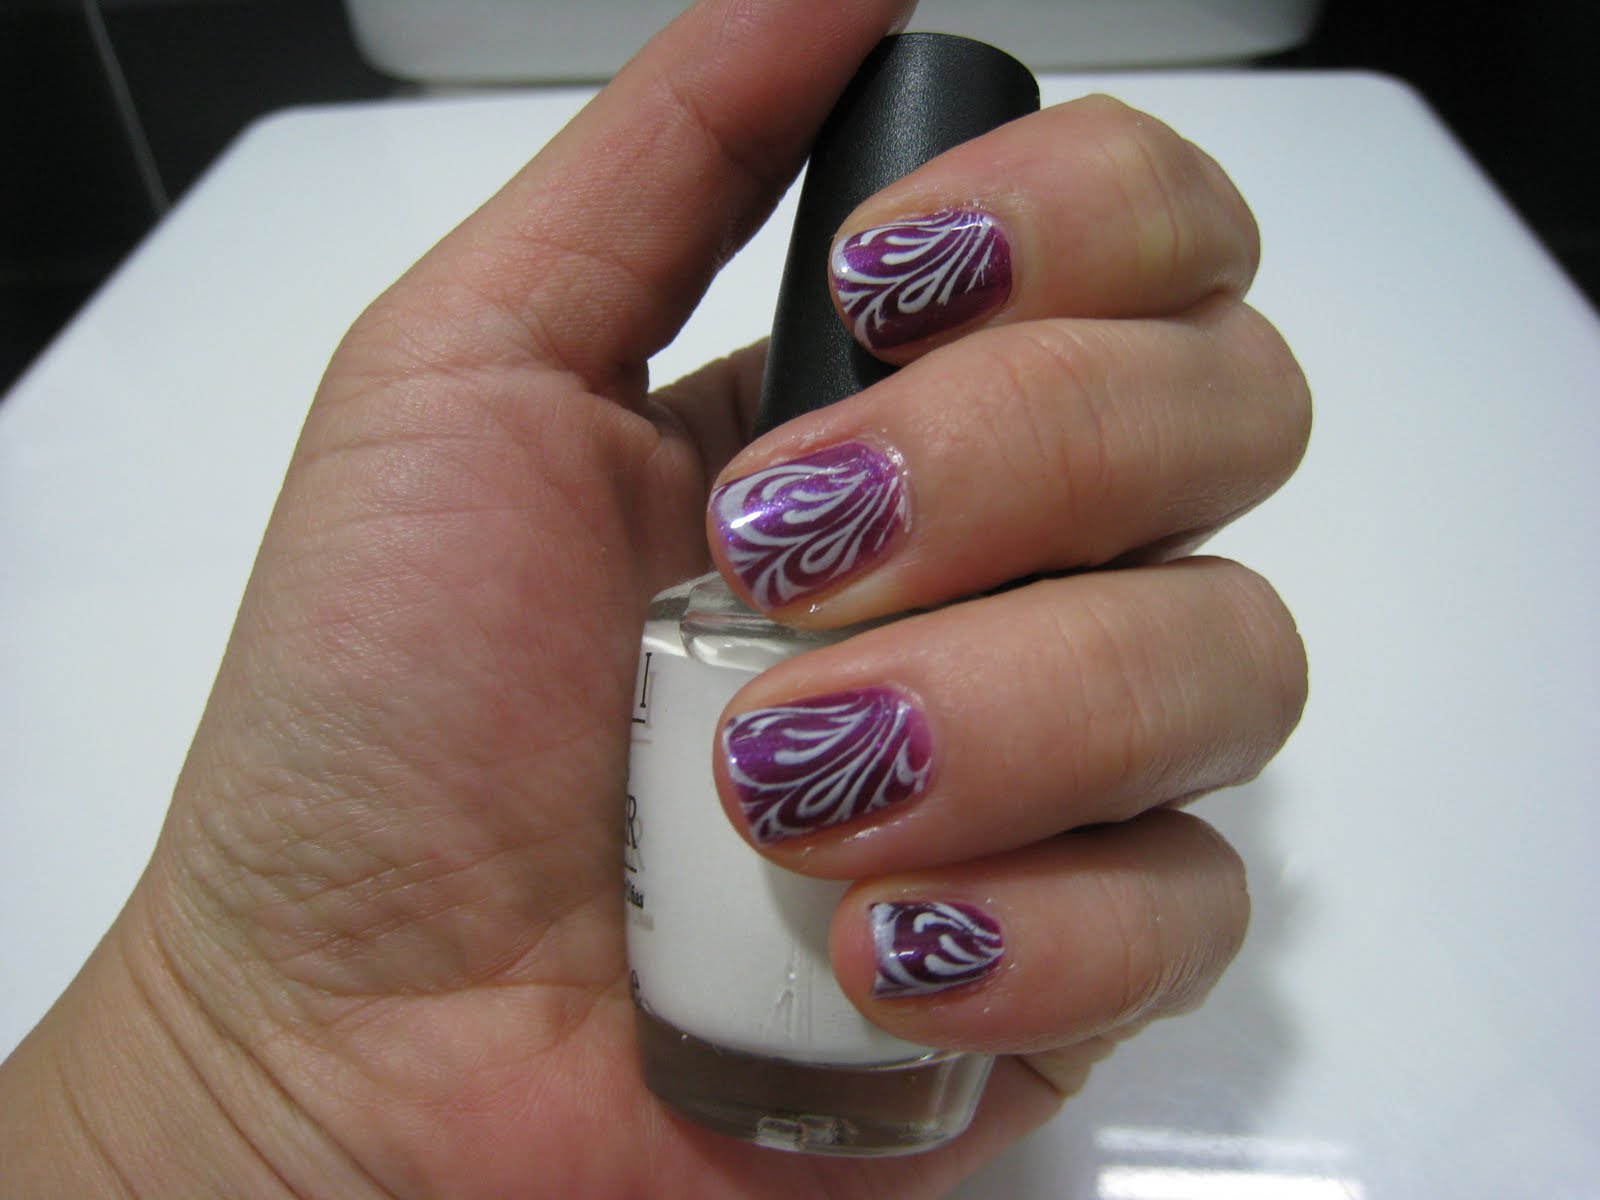 2. Konad Stamping Nail Art Designs - wide 4